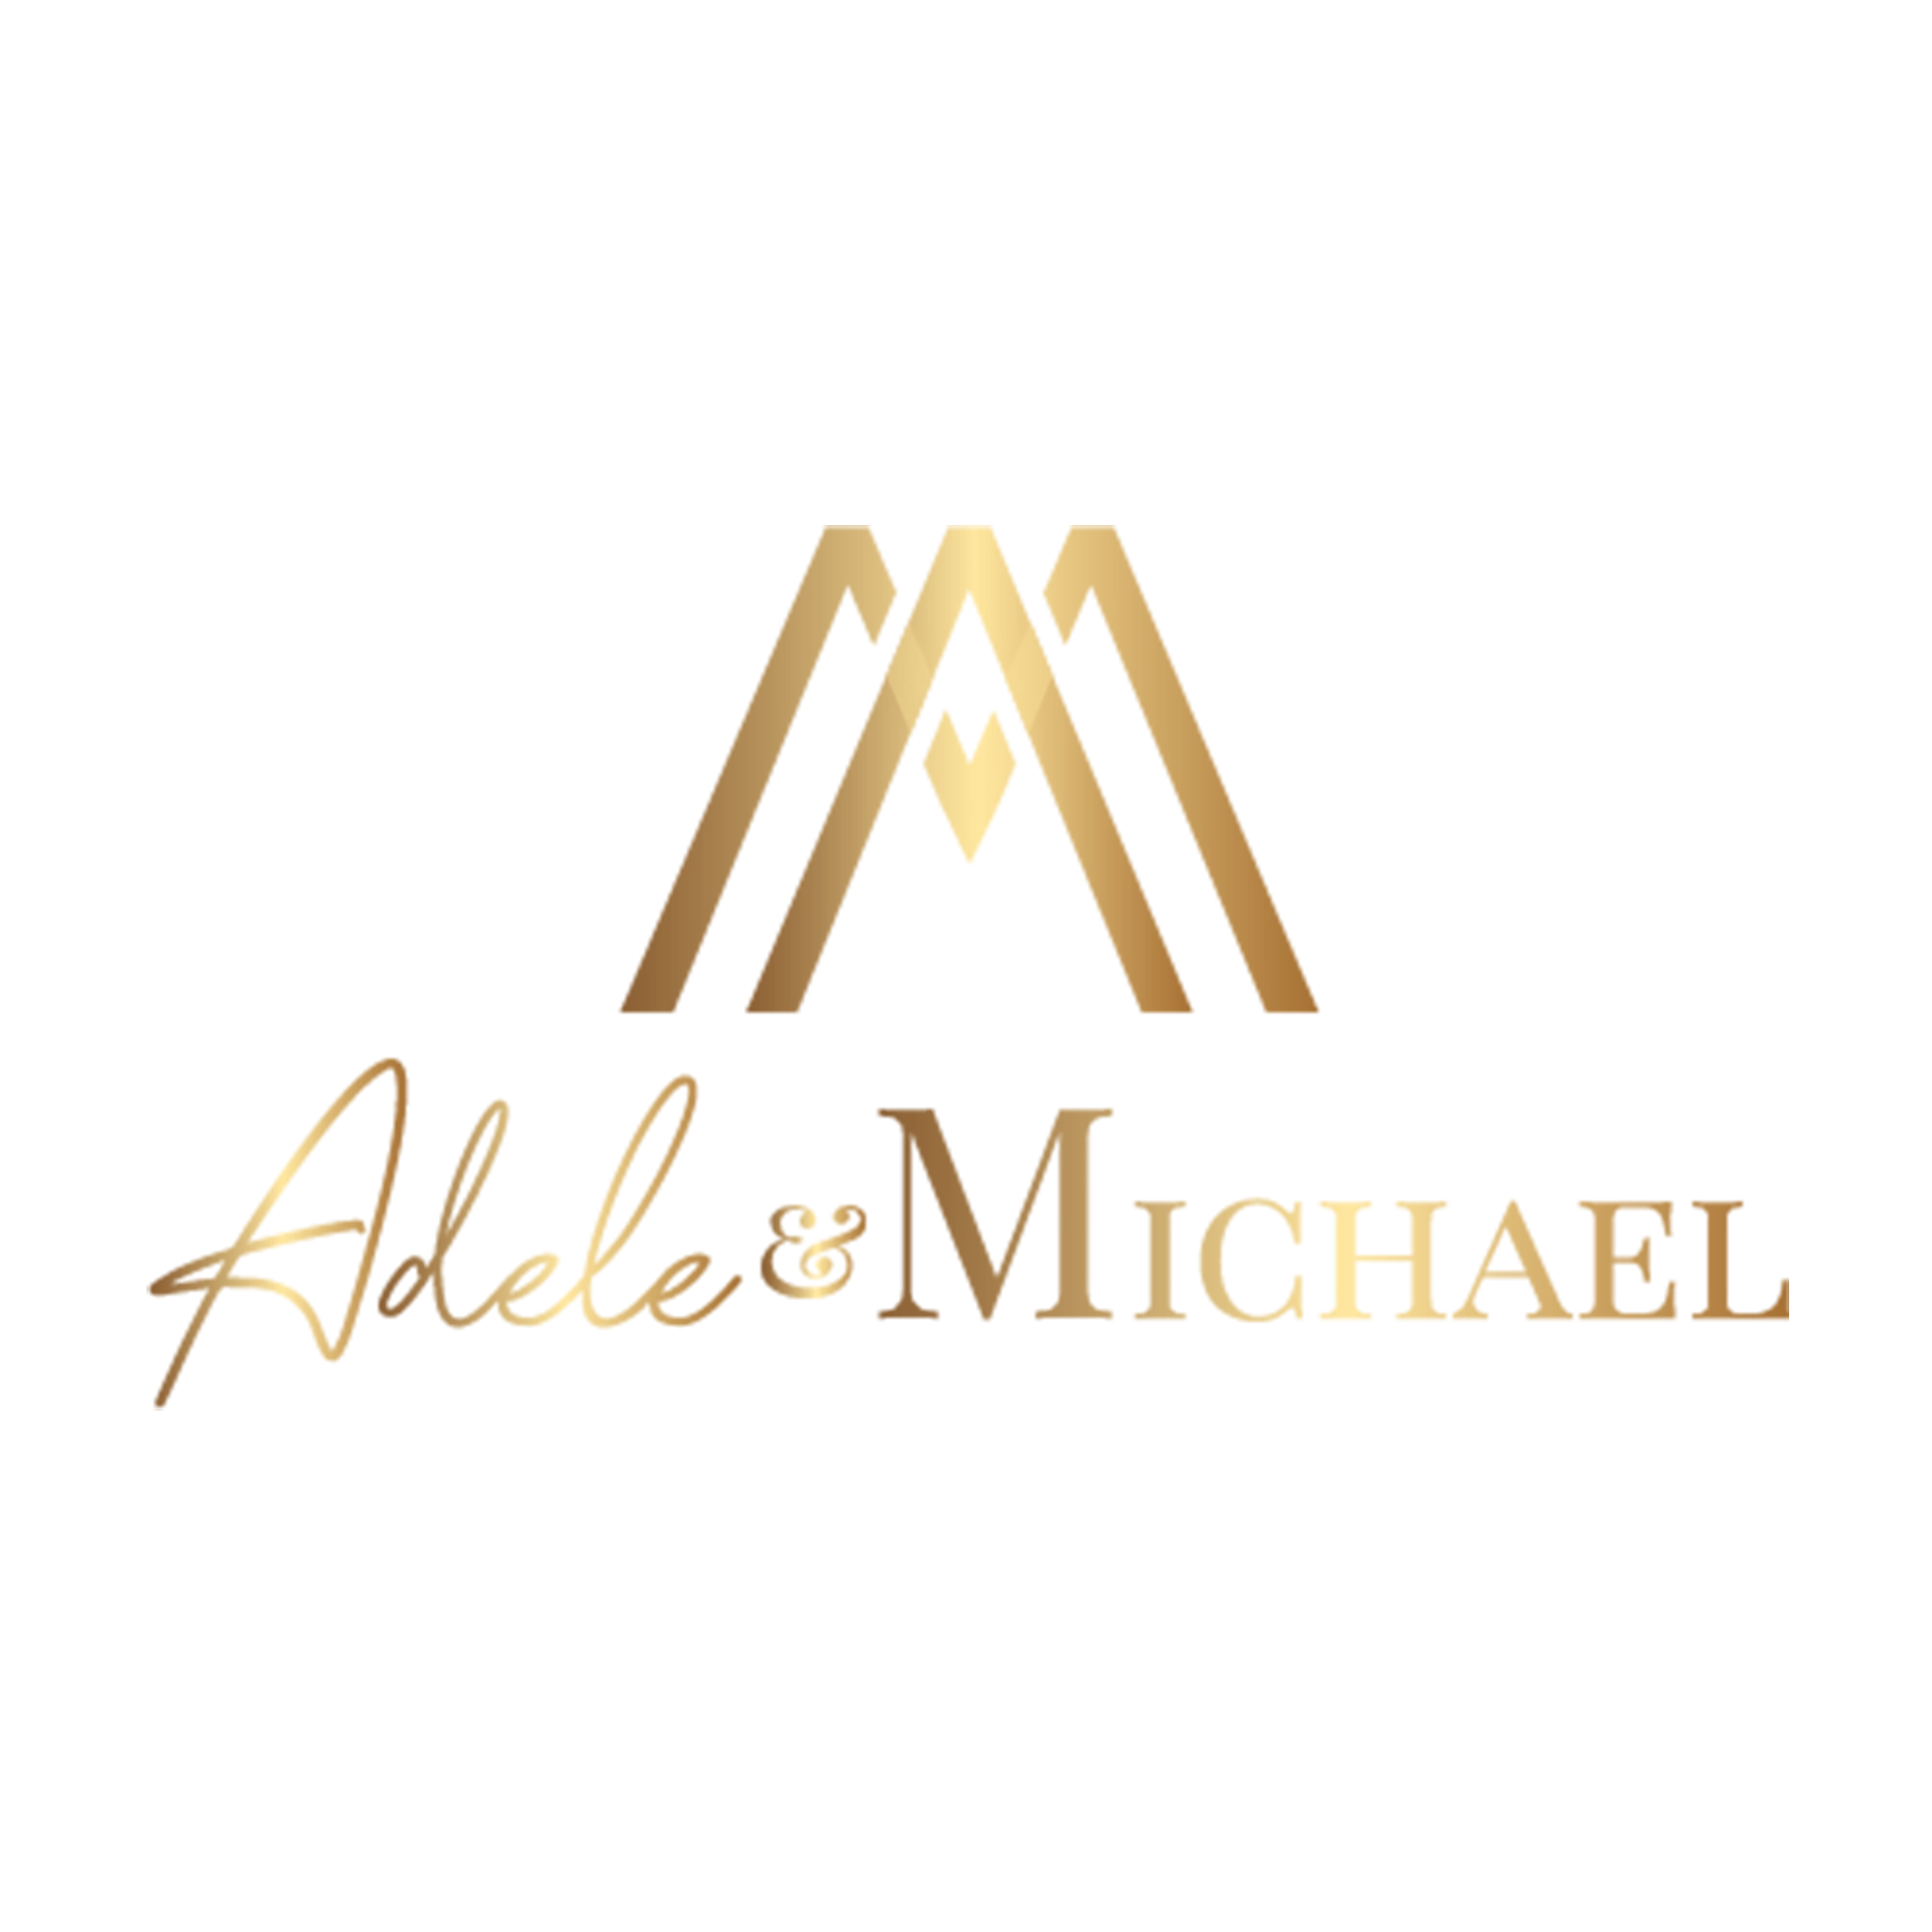 Adele & Michael Logos 300 dpi 6x6